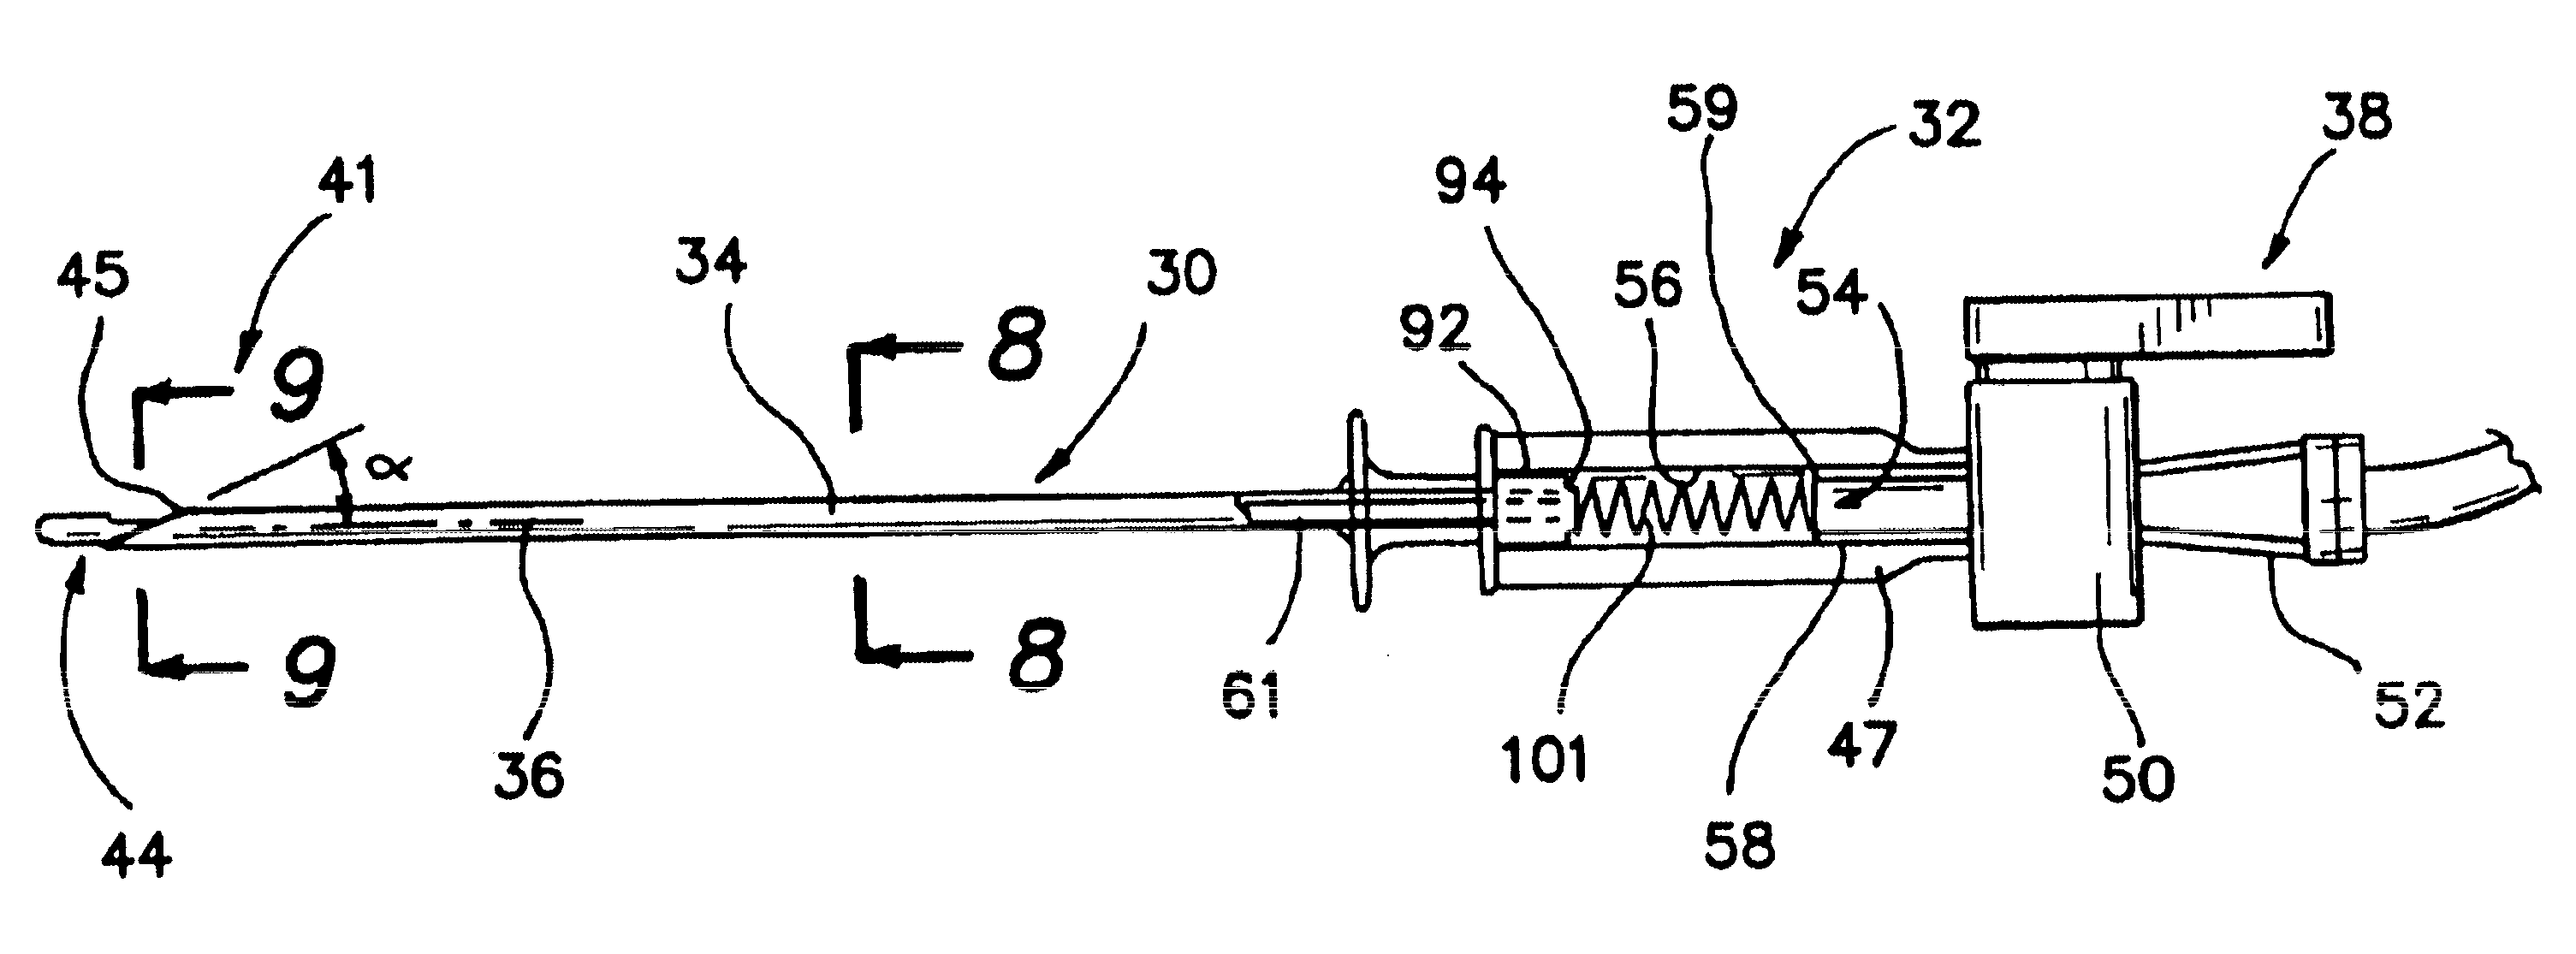 Insufflation needle apparatus